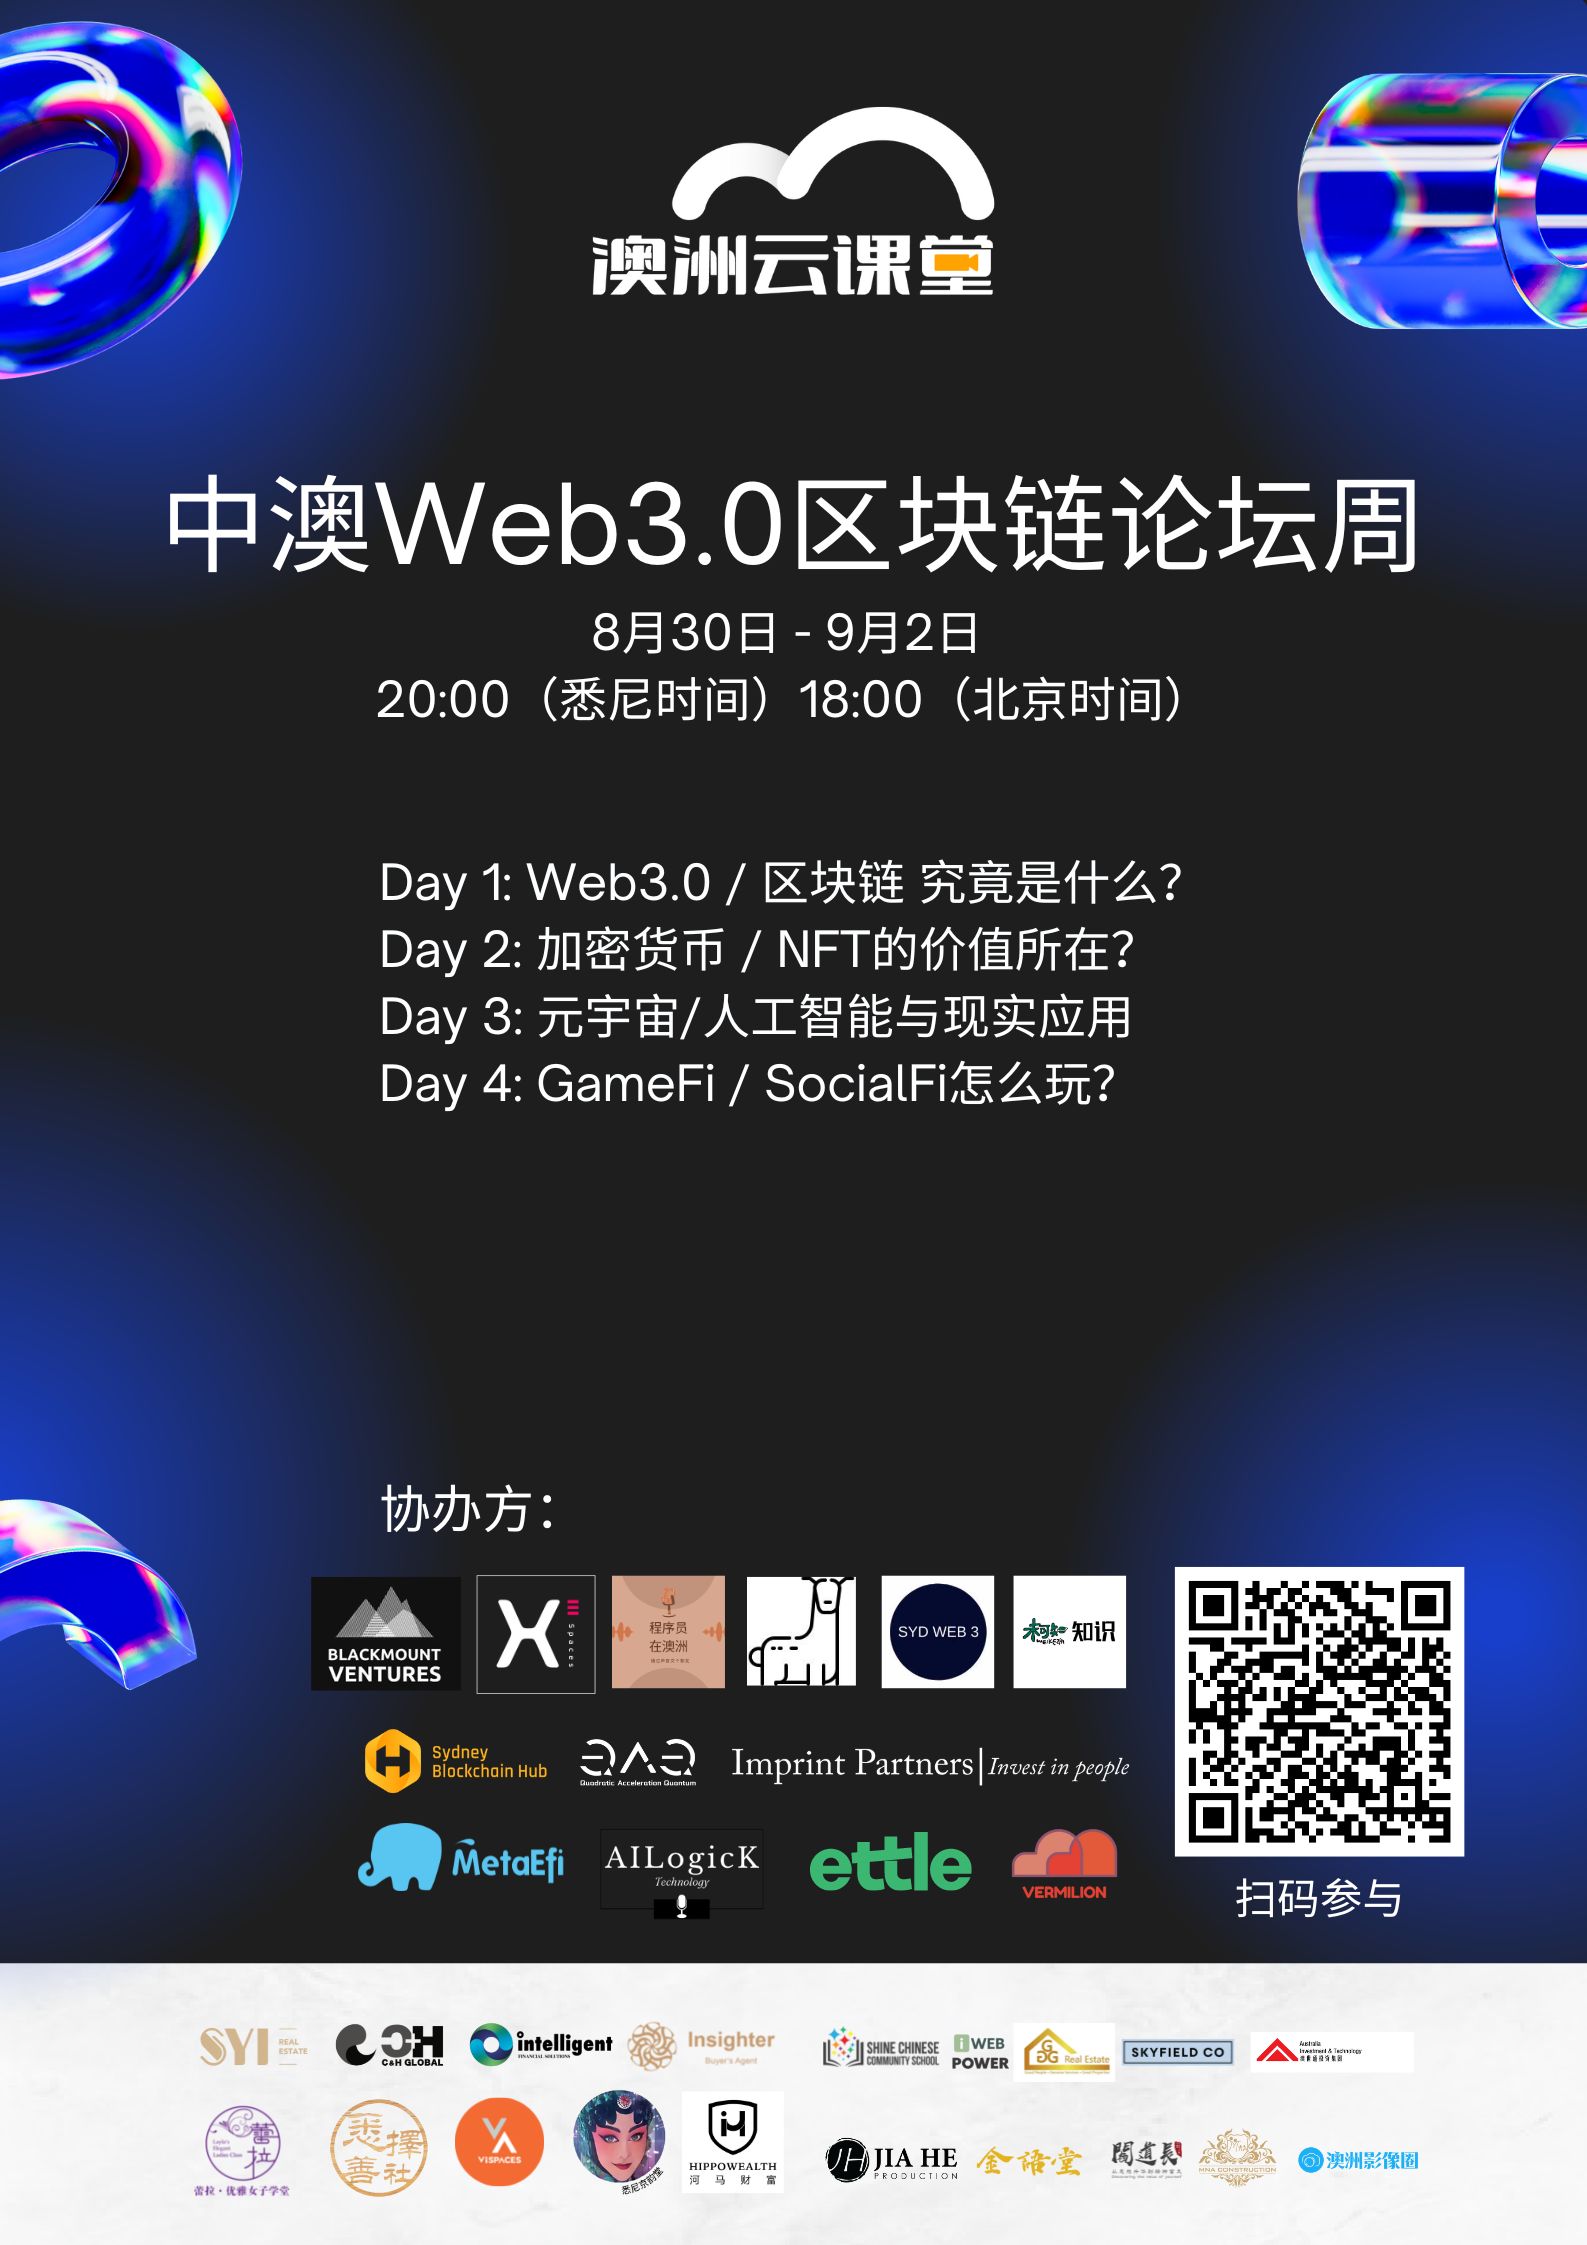 Web3.0 is Coming_new.jpg